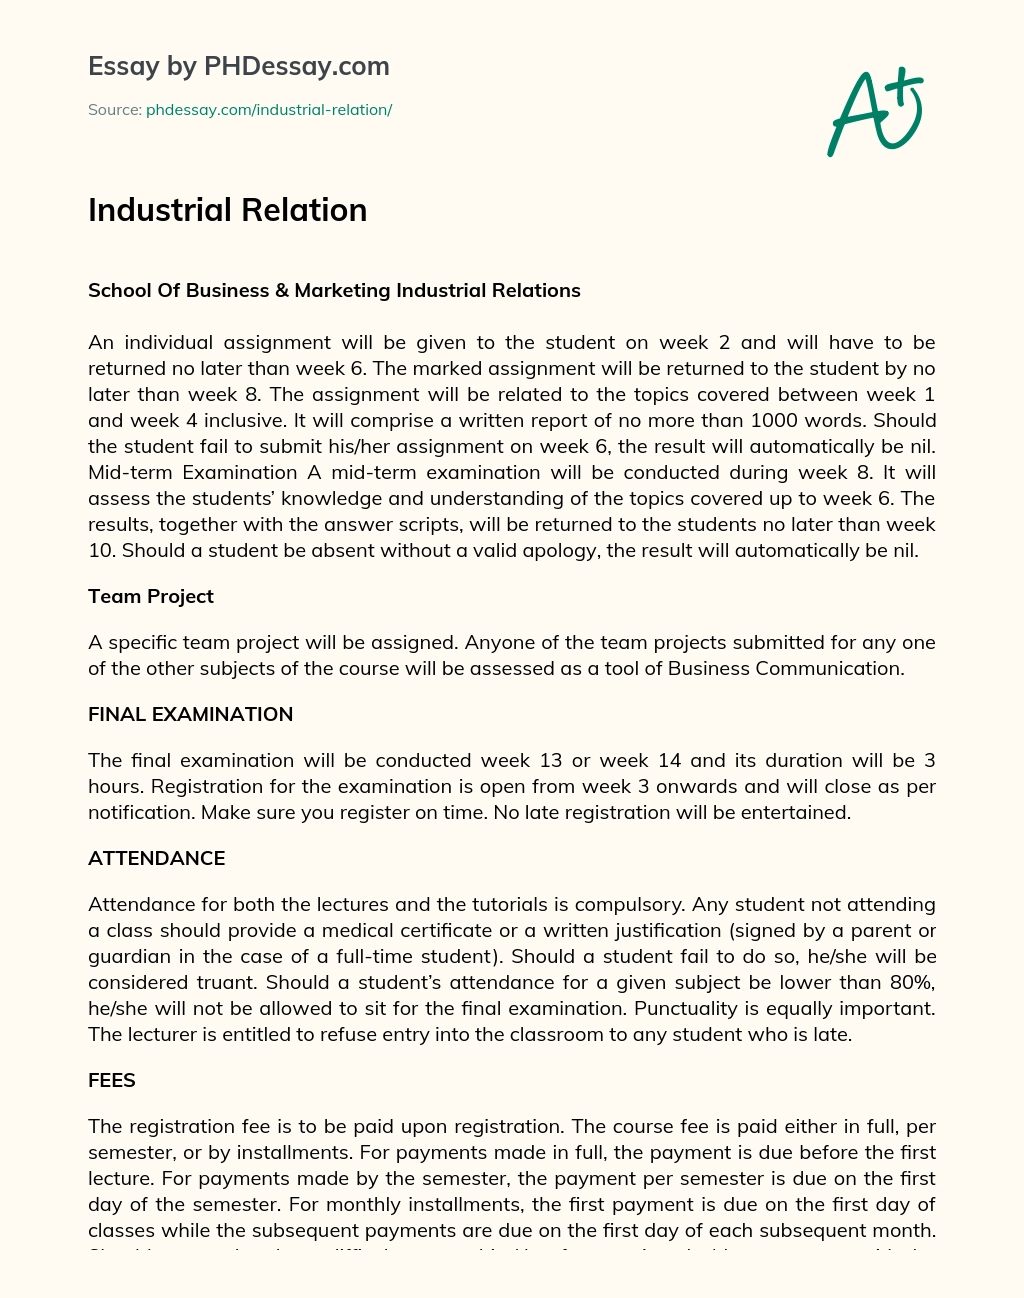 Industrial Relation essay